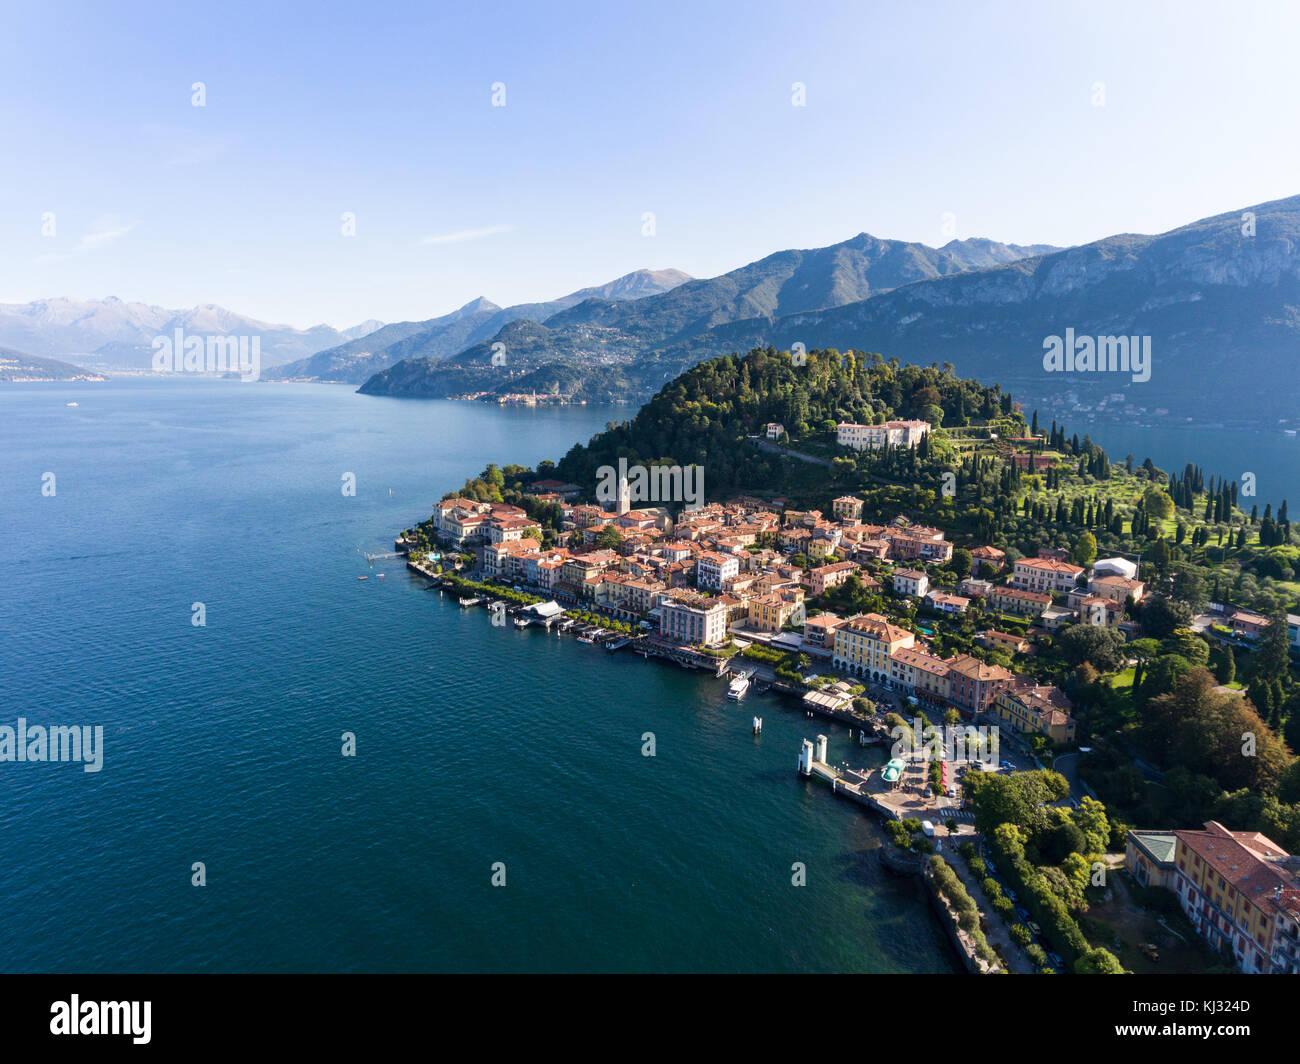 Famous destination in Italy, Bellagio on Como Lake Stock Photo